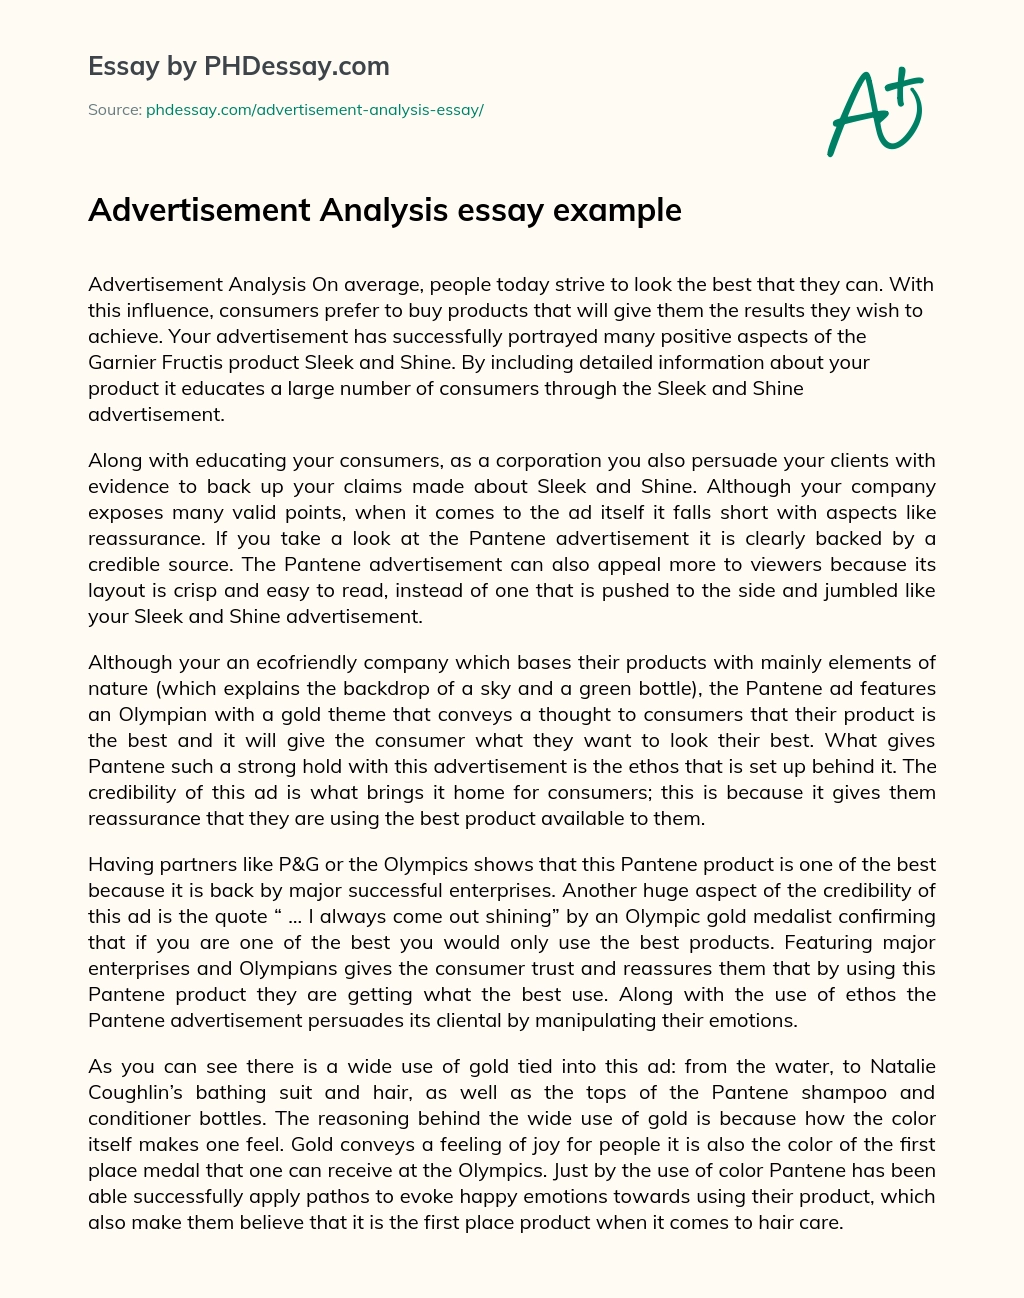 Advertisement Analysis essay example essay